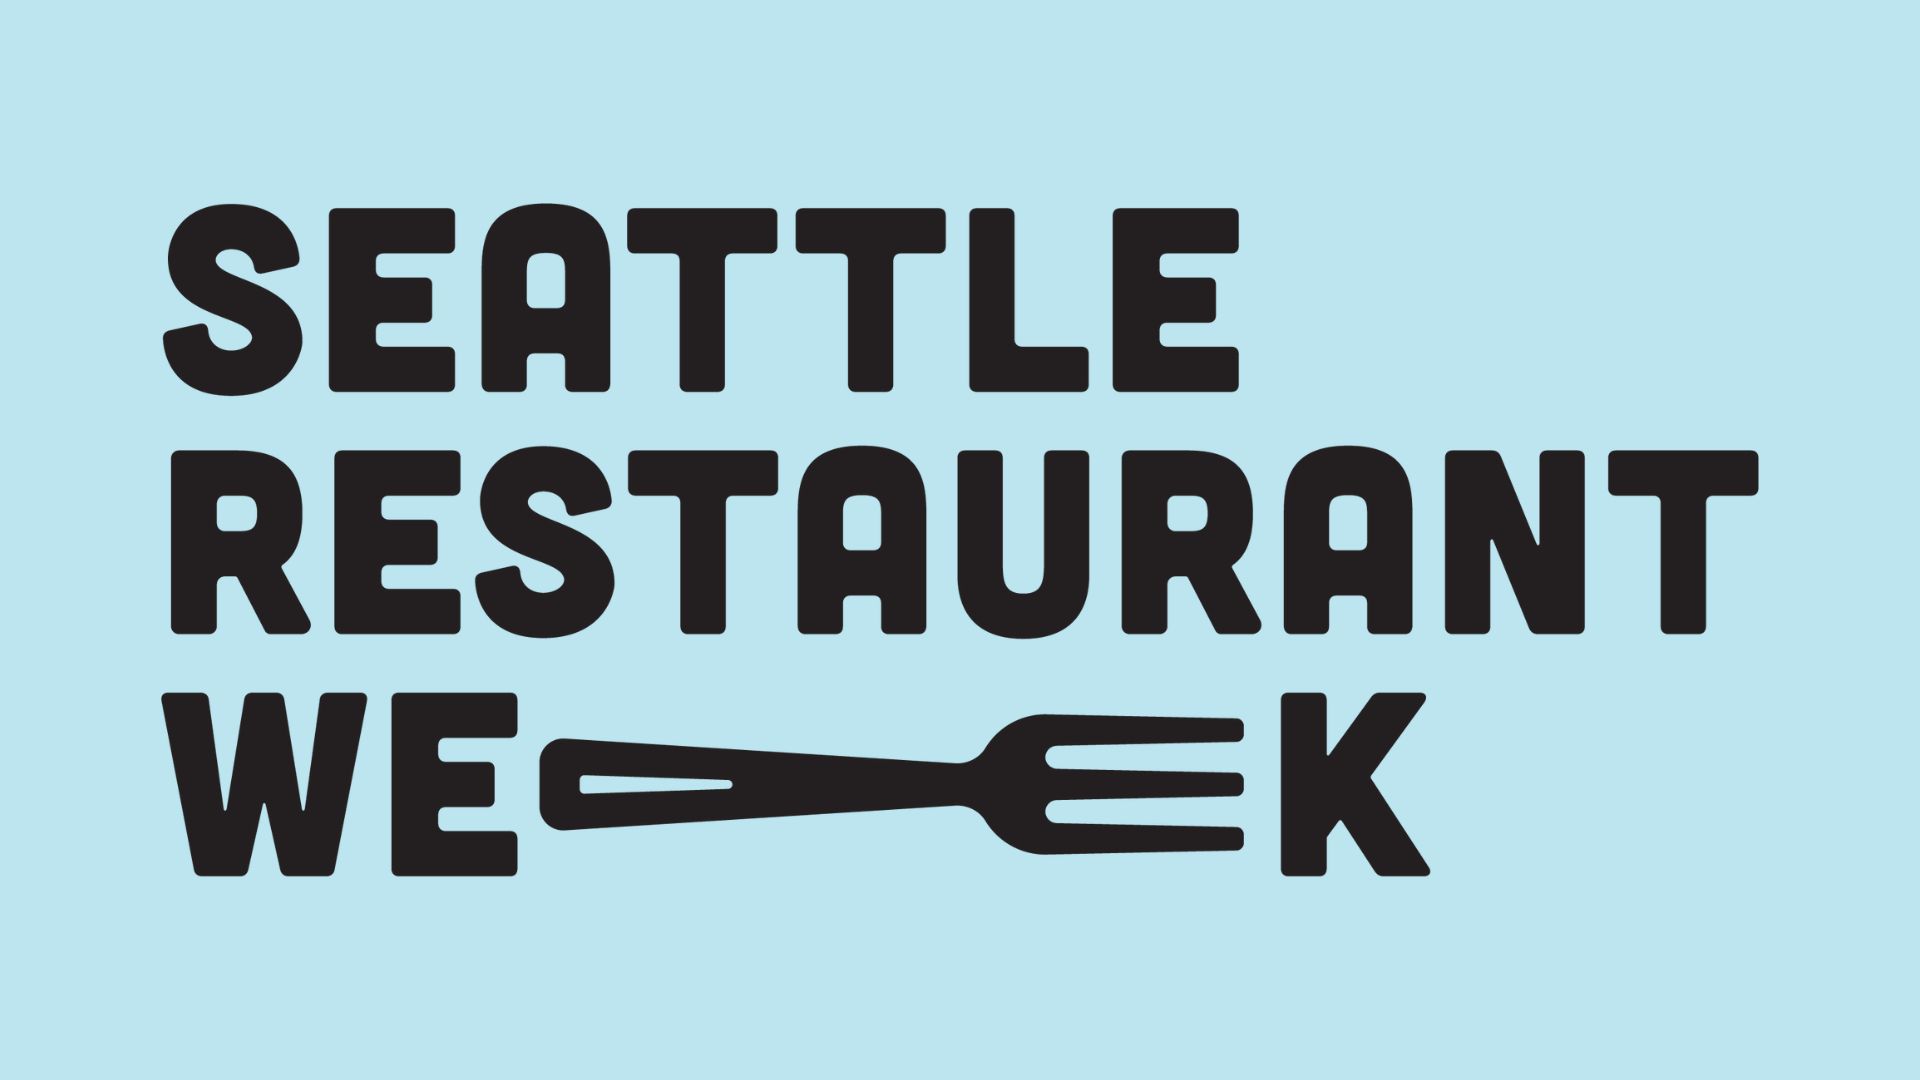 Seattle Restaurant Week is a great opportunity to SpendLikeItMatters